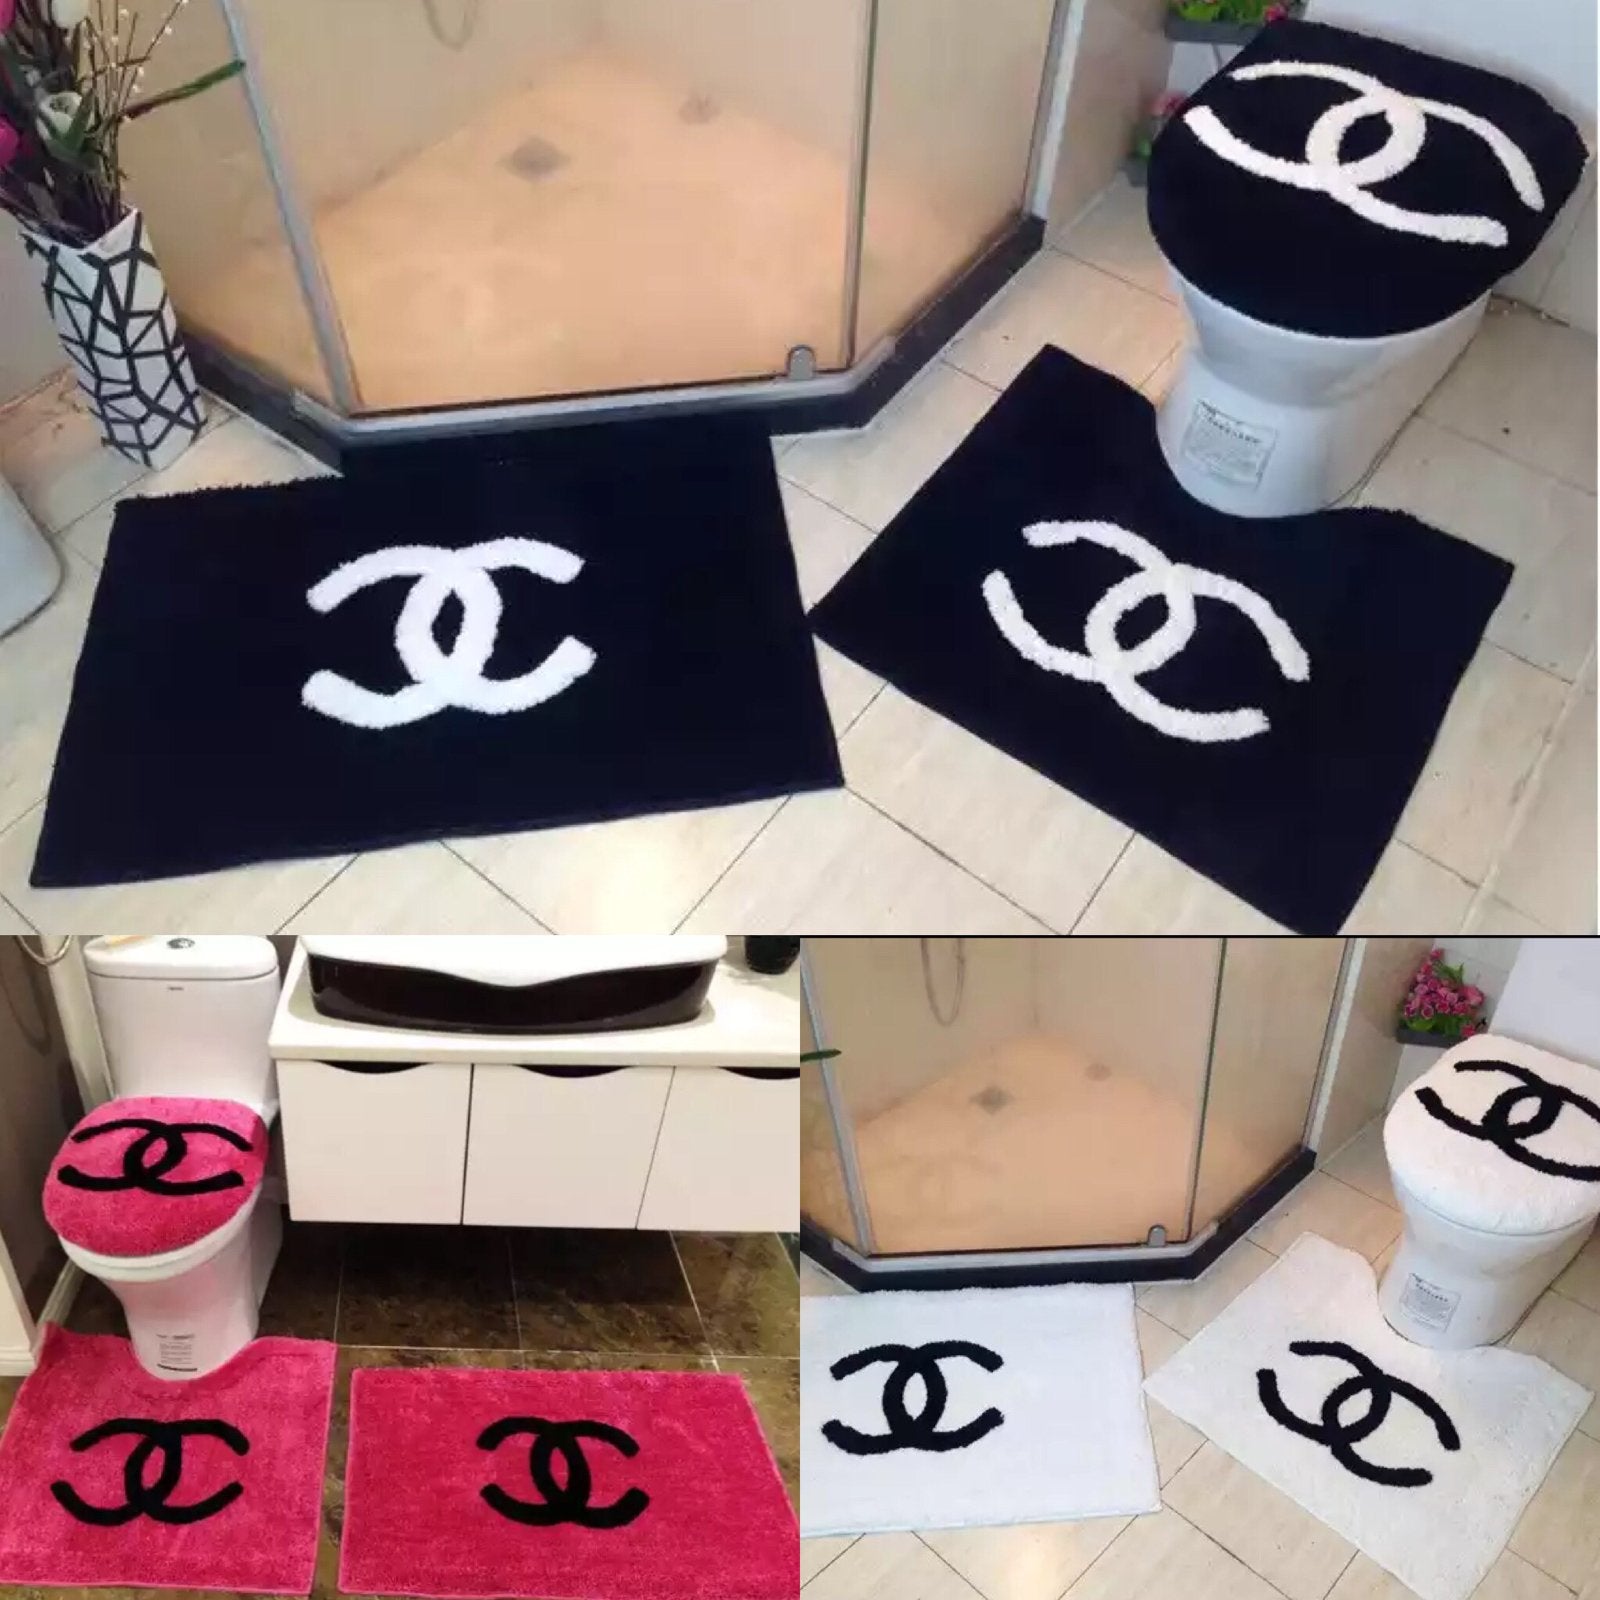 Chanel inspired bathroom set